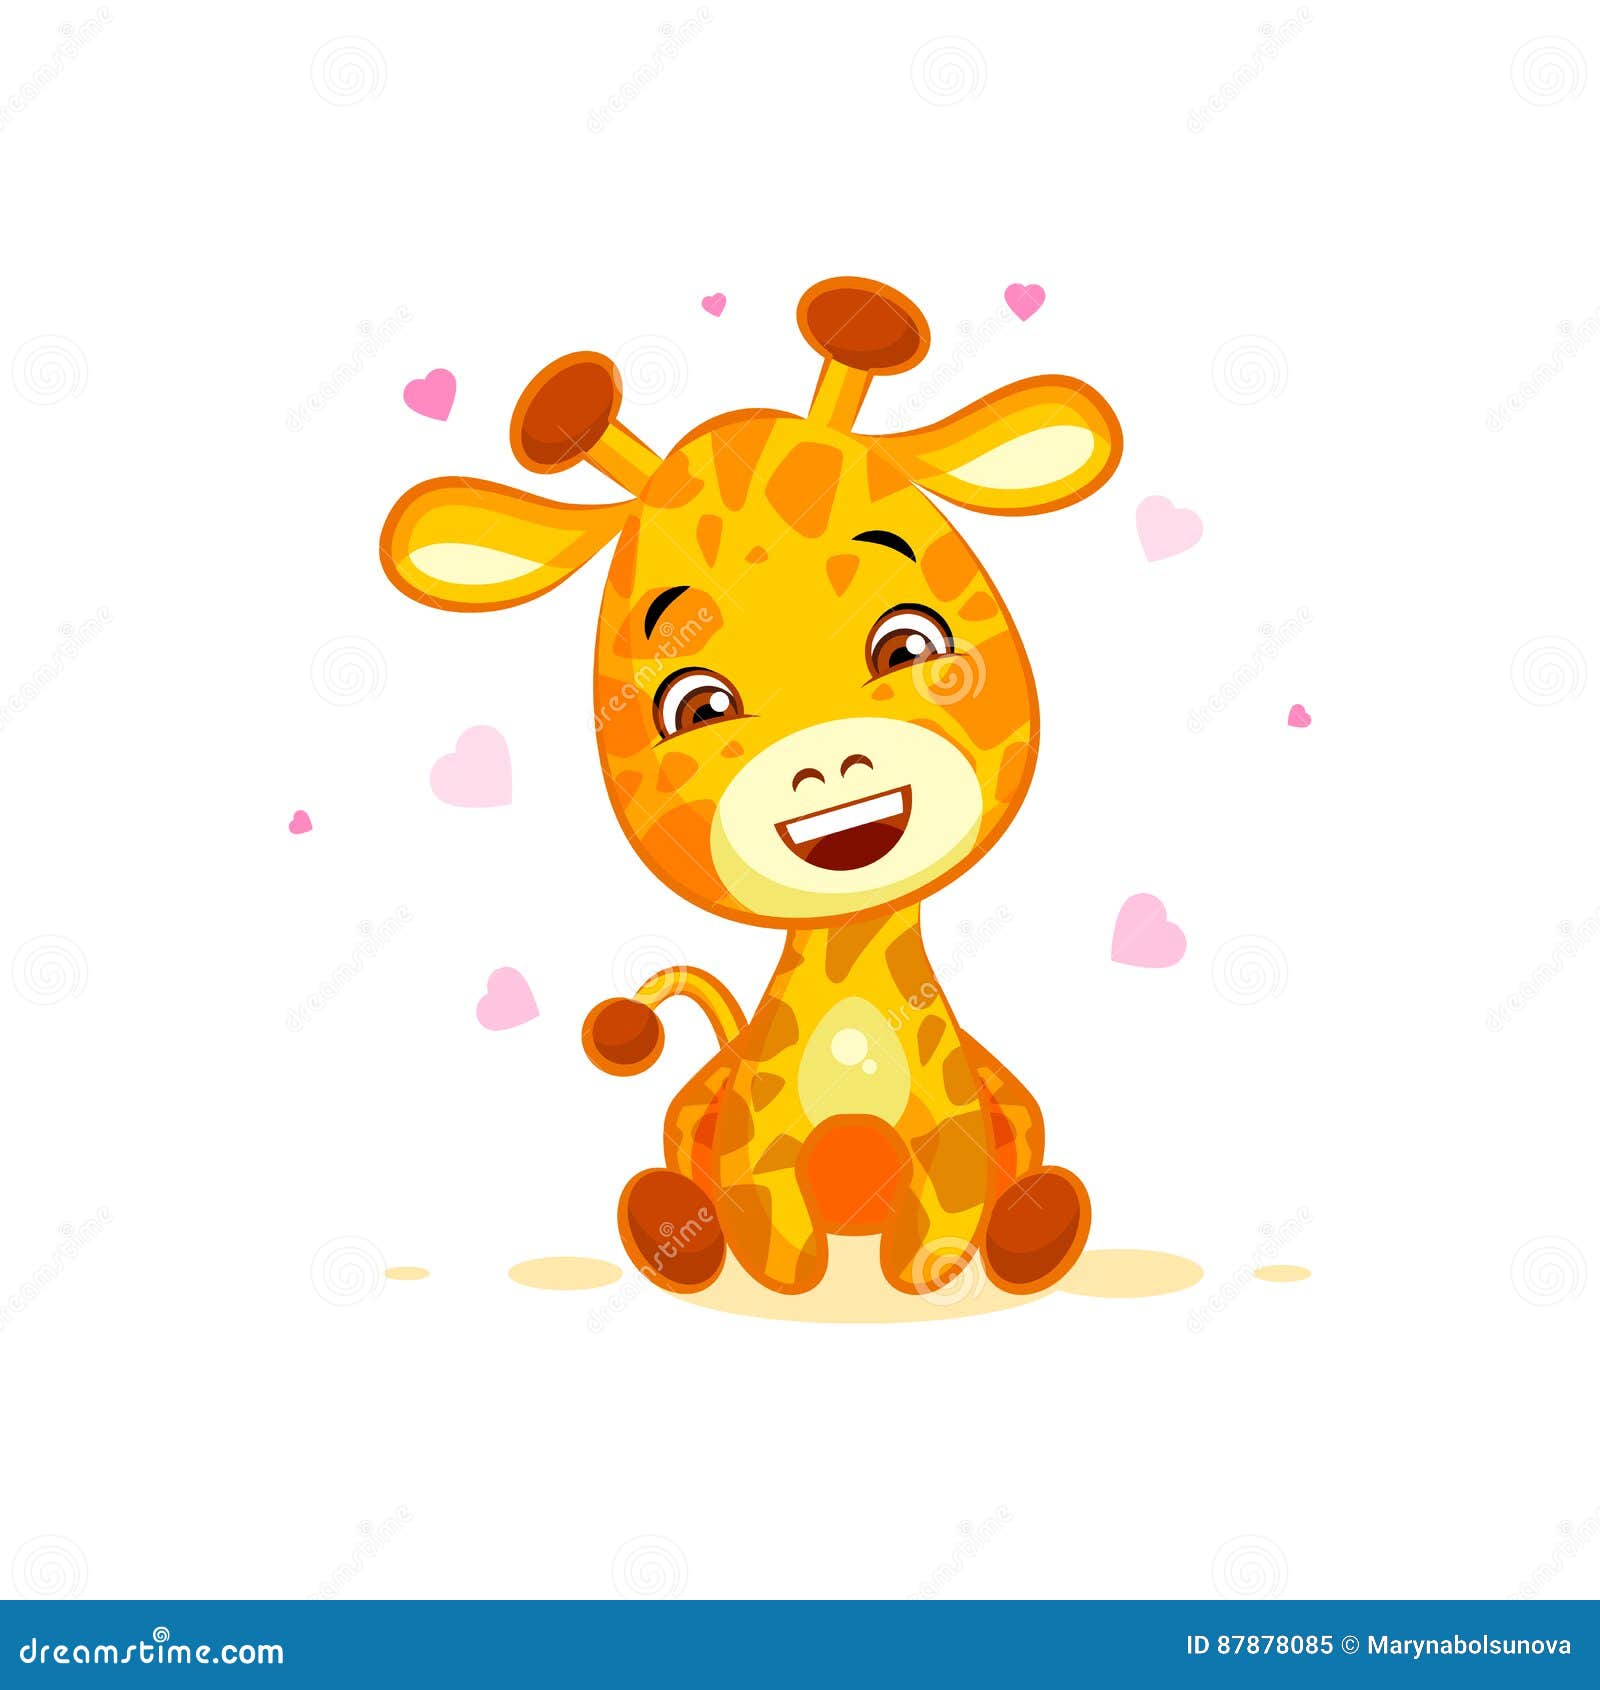 Emoji Hello Hi in Love Hearts You are Cute Character Cartoon Giraffe  Sticker Emoticon Stock Vector - Illustration of emotional, stickers:  87878085